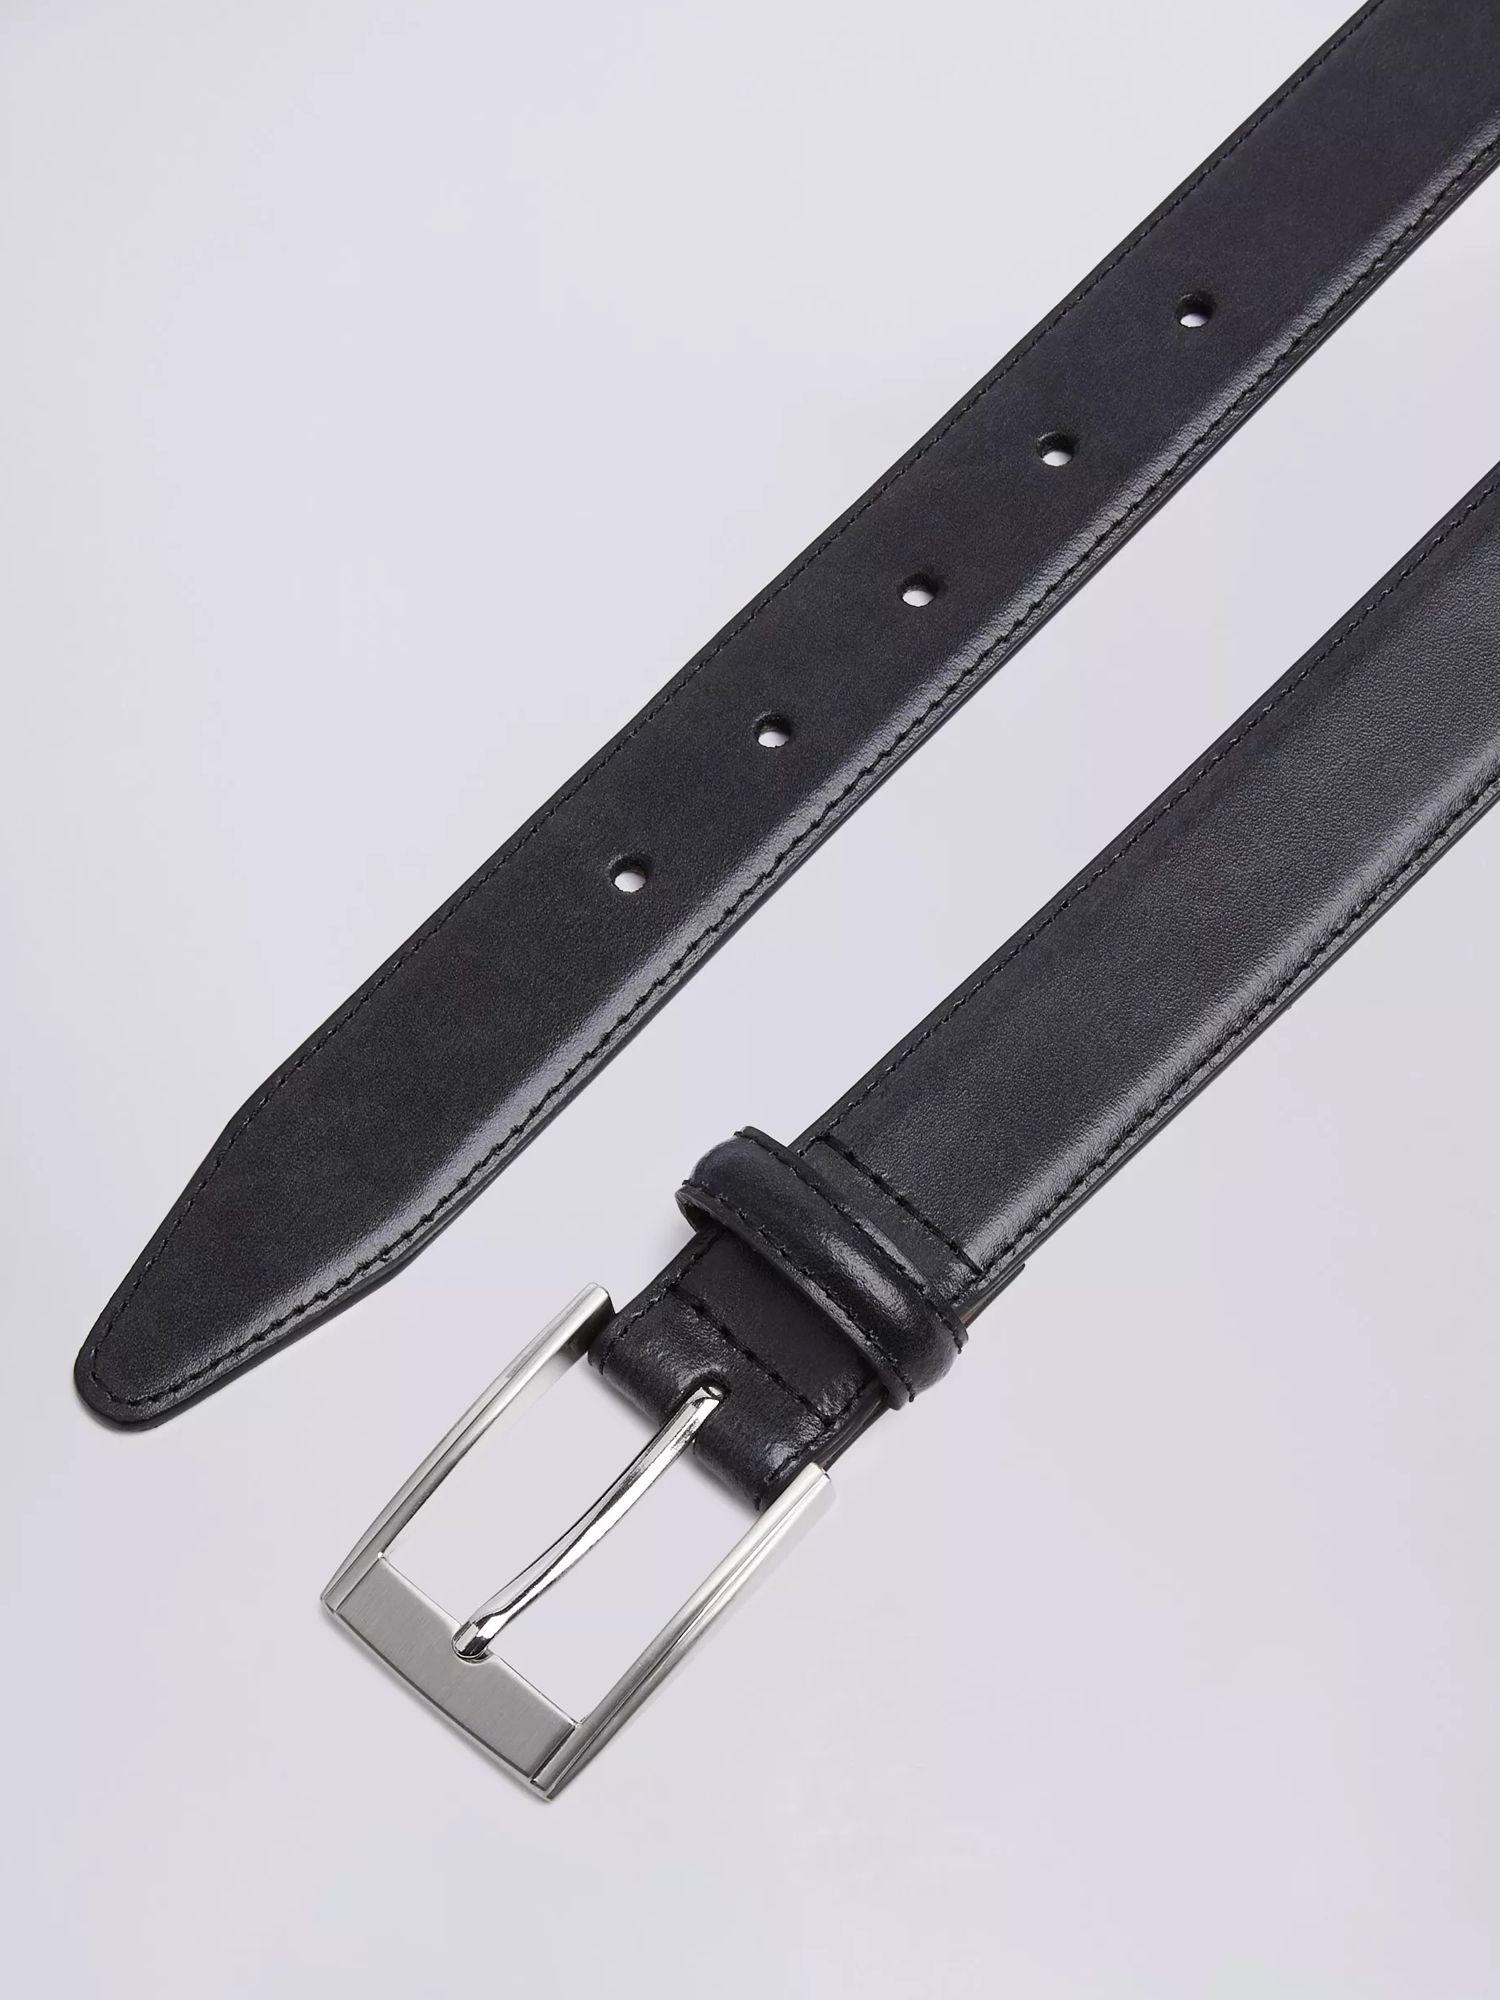 Buy Moss Leather Belt Online at johnlewis.com